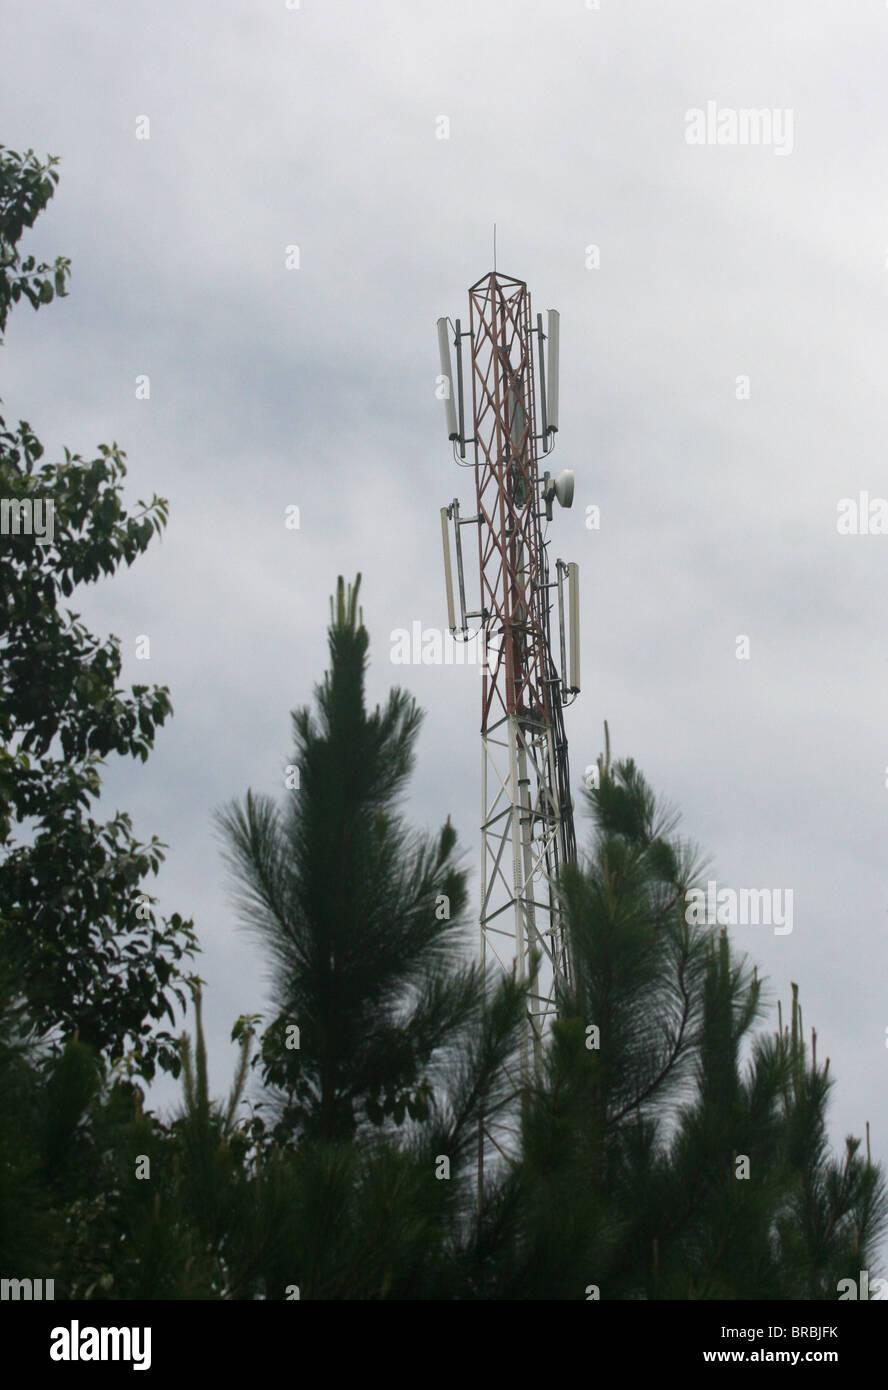 Telecoms mast in a remote rural forest area in Uganda Stock Photo